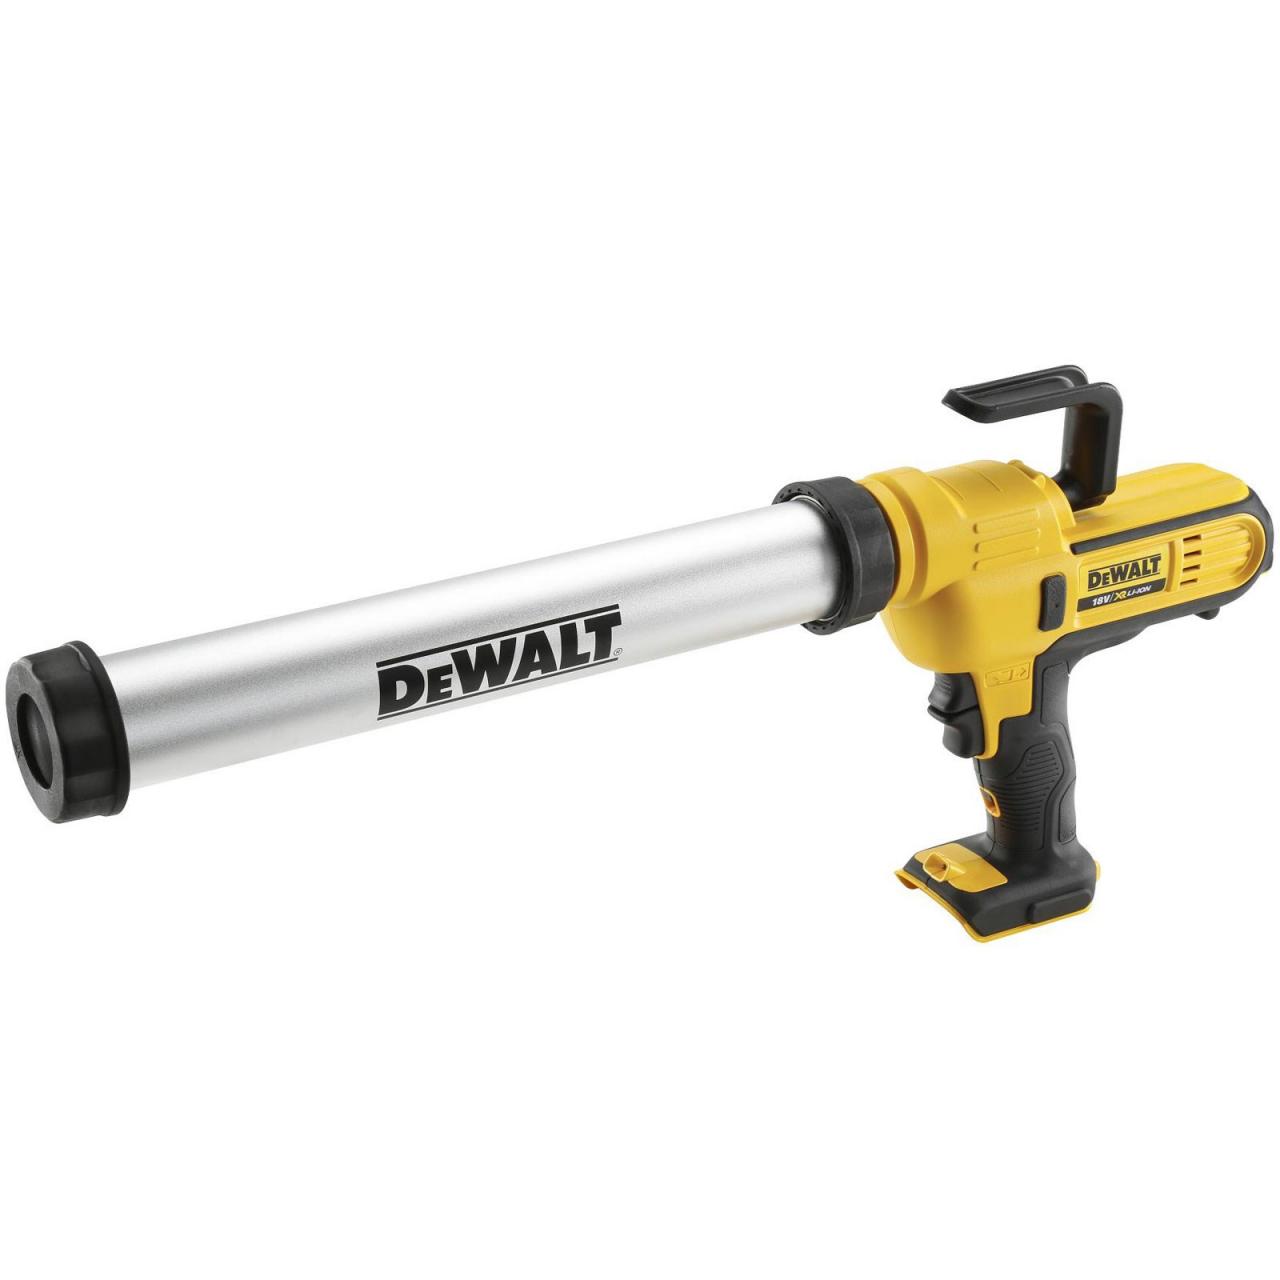 DeWALT Cordless Caulking Gun 20 Volt 10 Oz Anti Drip Various Speed Tool  Only New Home & Garden com Tools & Workshop Equipment